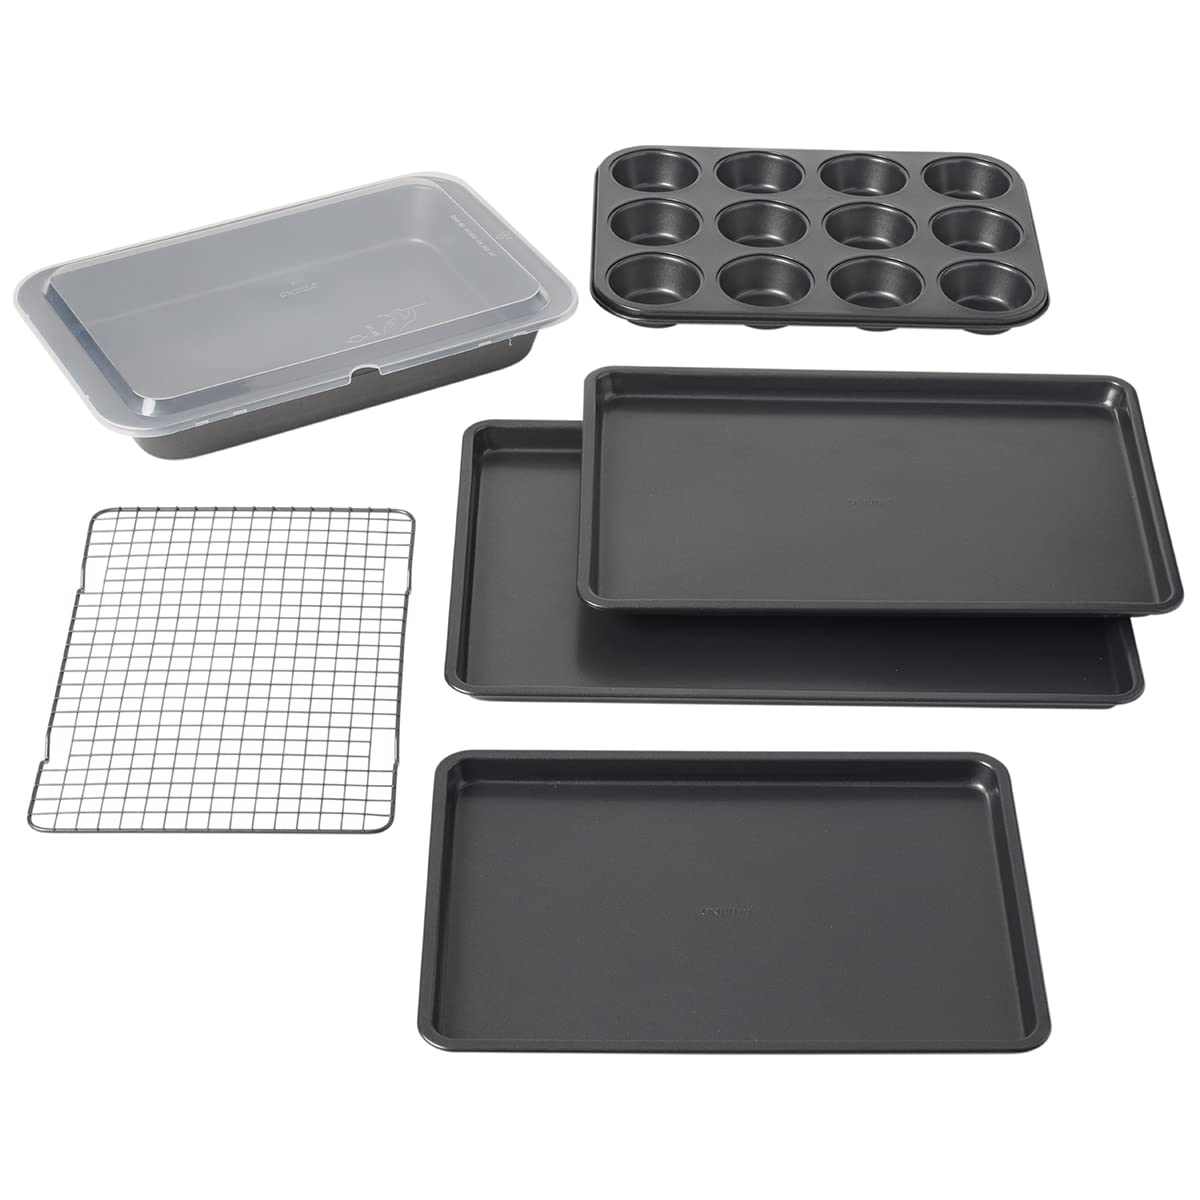 Oneida Simply Sweet 7 Piece Nonstick Metal Bakeware Set, High-Performance & Dishwasher Safe